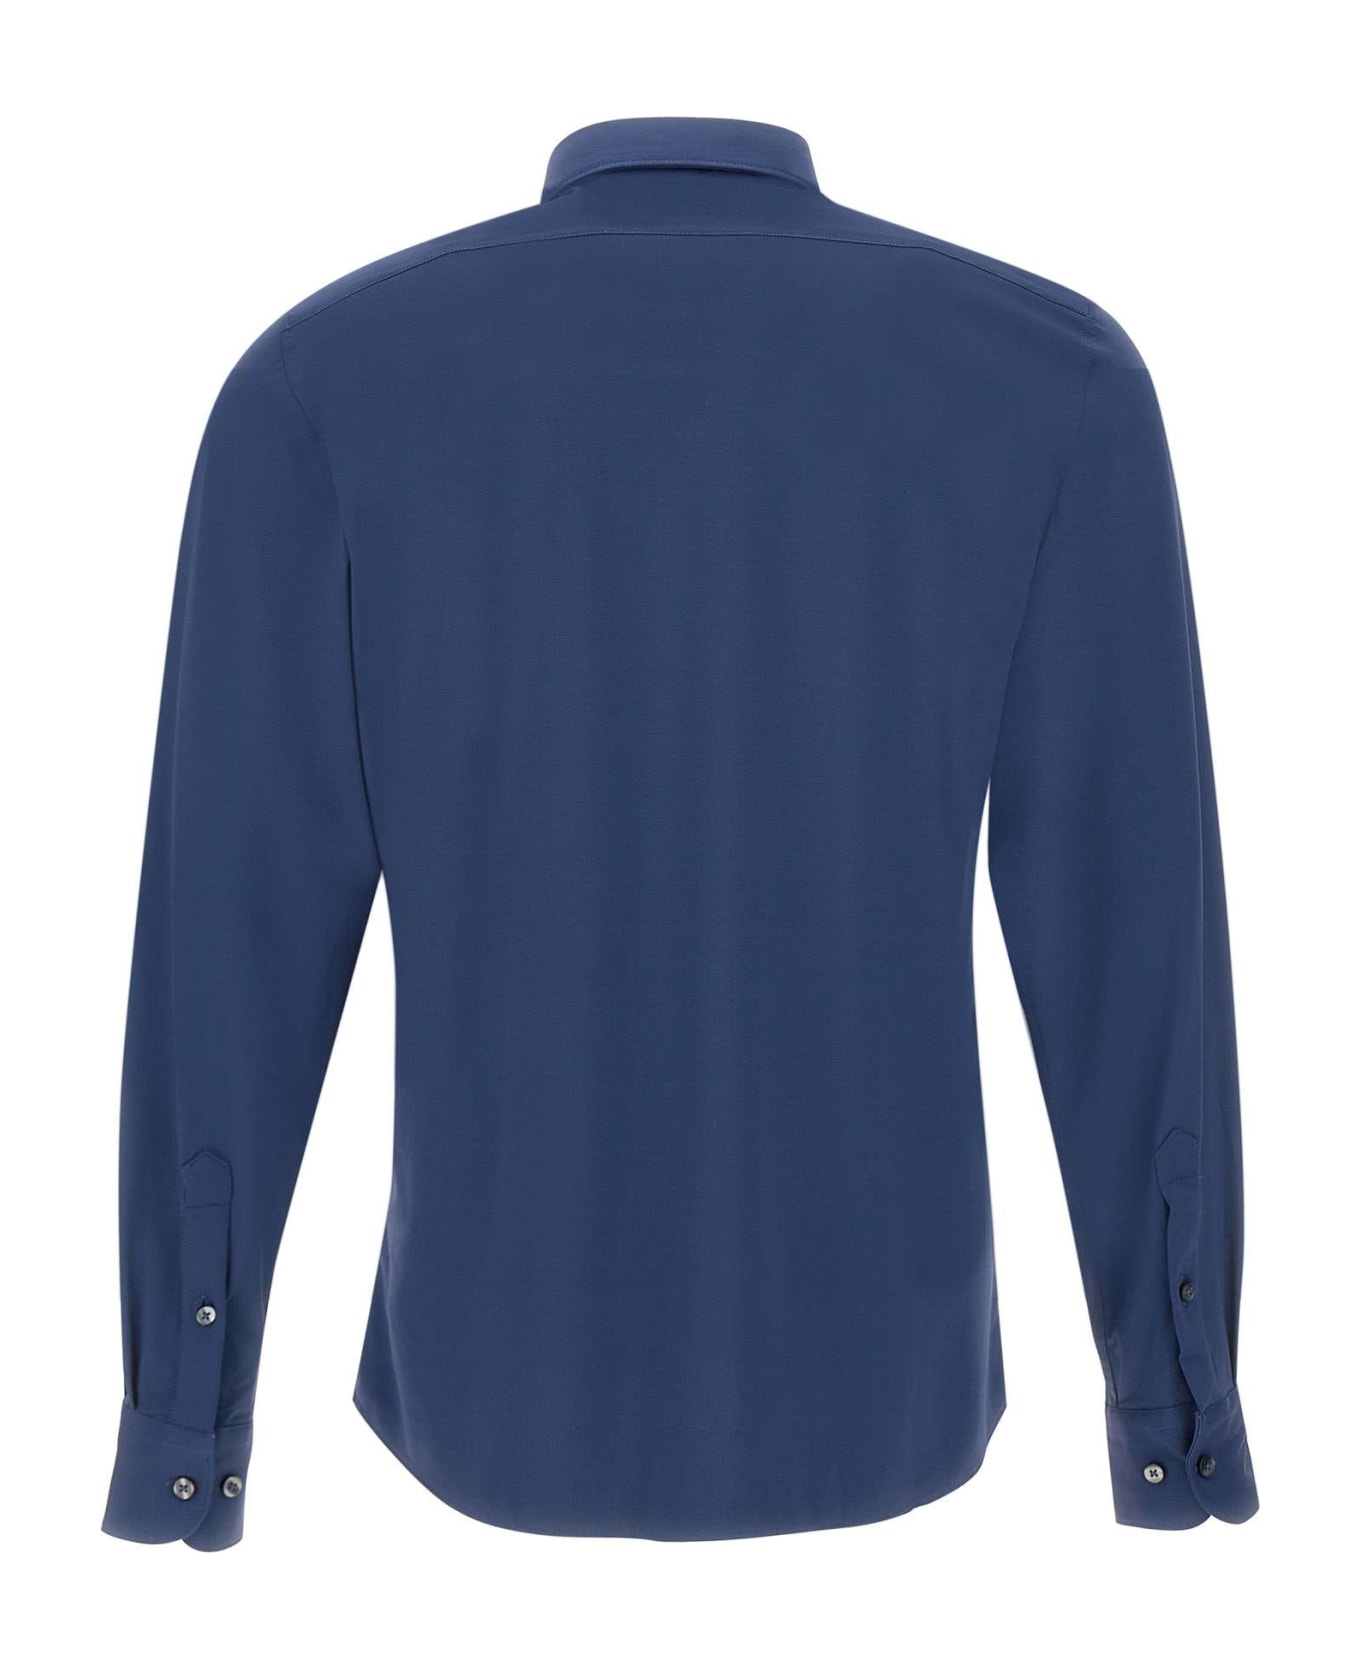 RRD - Roberto Ricci Design "oxford Open" Shirt - BLUE シャツ